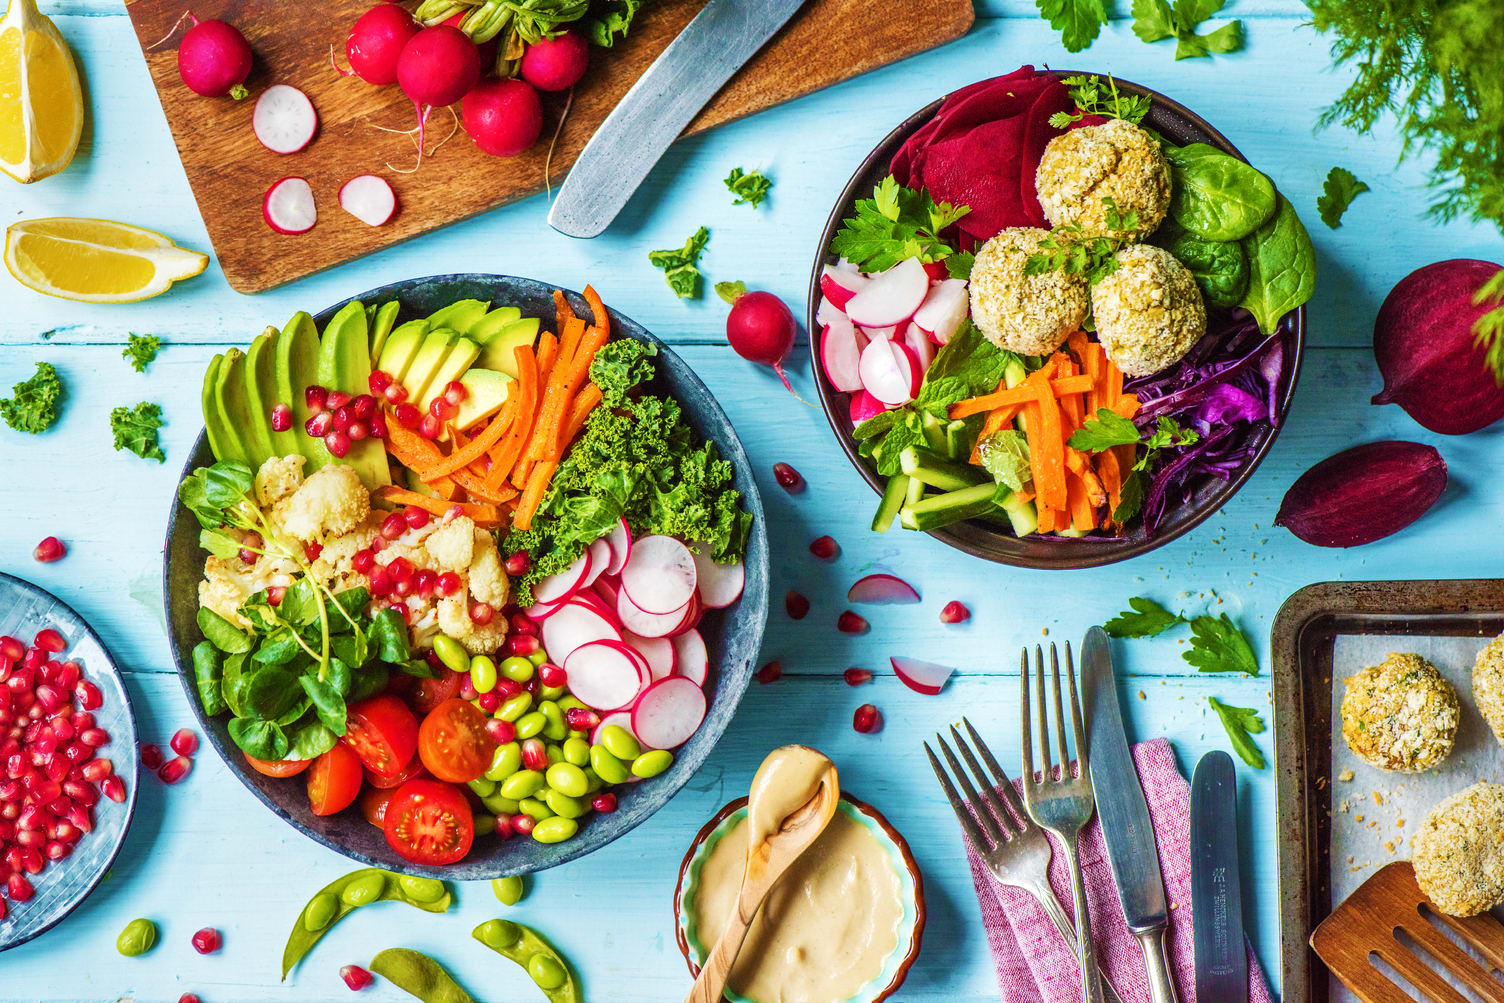 <h2>Vegetarian Meal Plan: Make being vegetarian easy</h2>